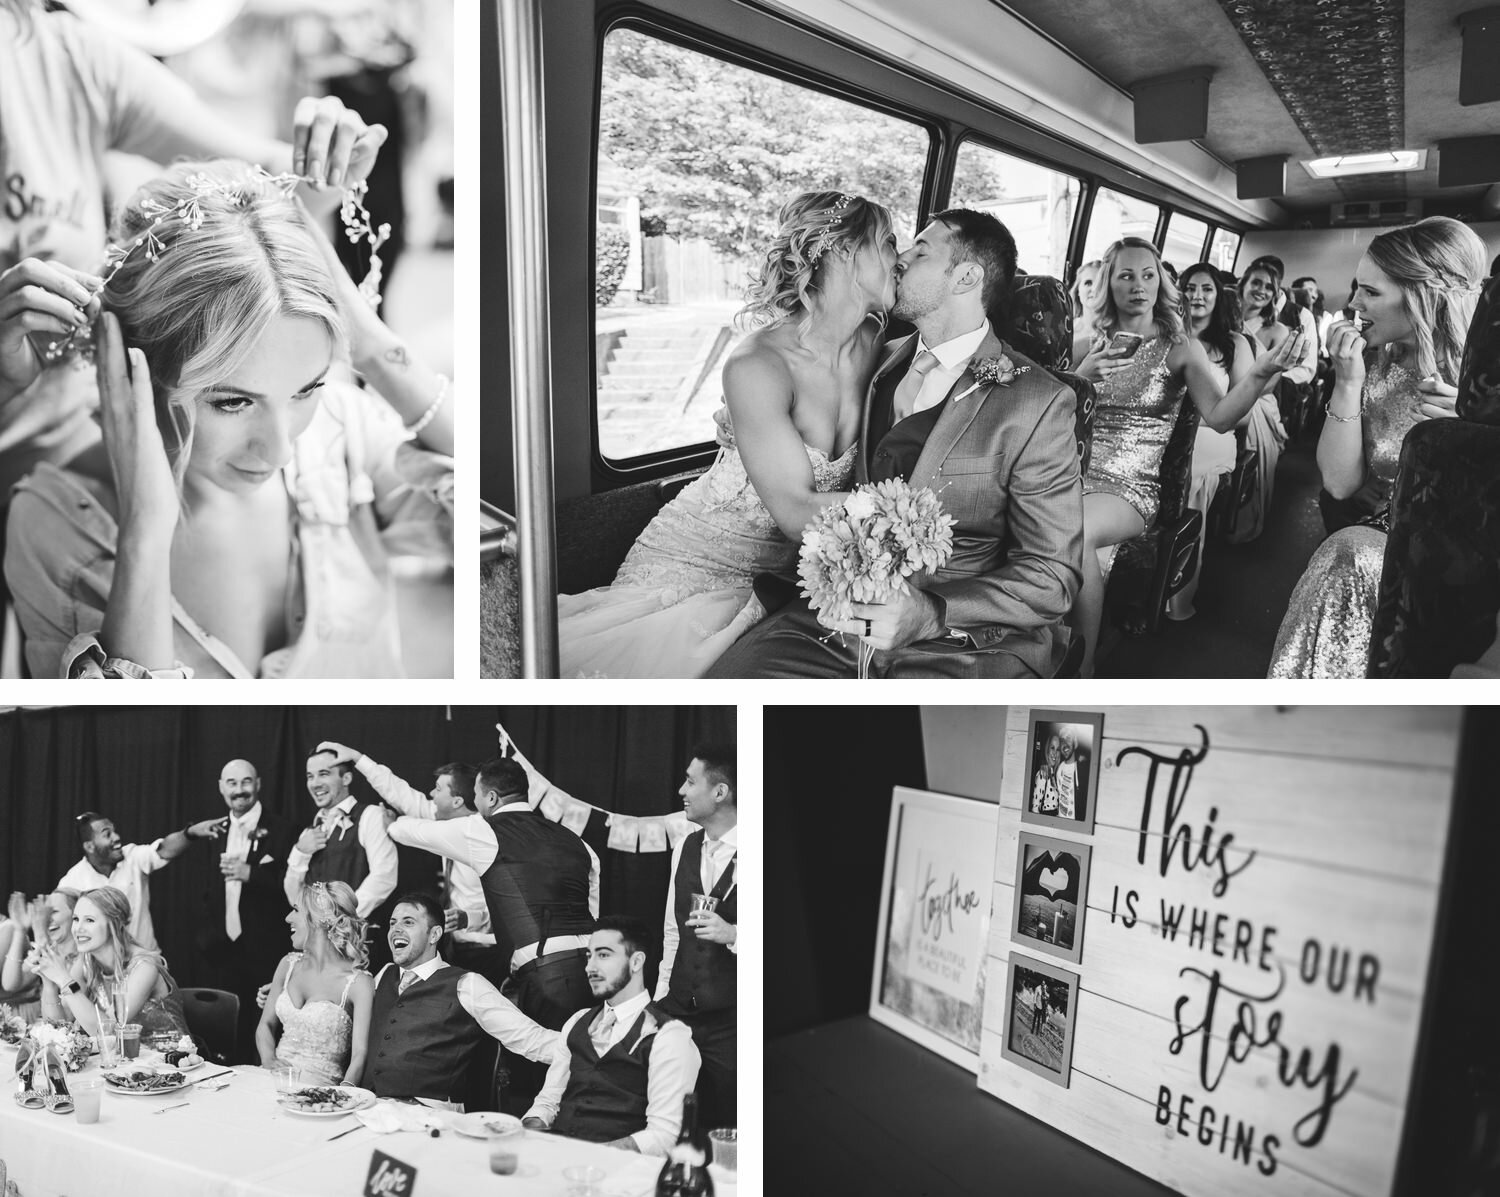 Seattle-wedding-photography-sayta-curcio-photography-Erik-Braziunas- 5.jpg